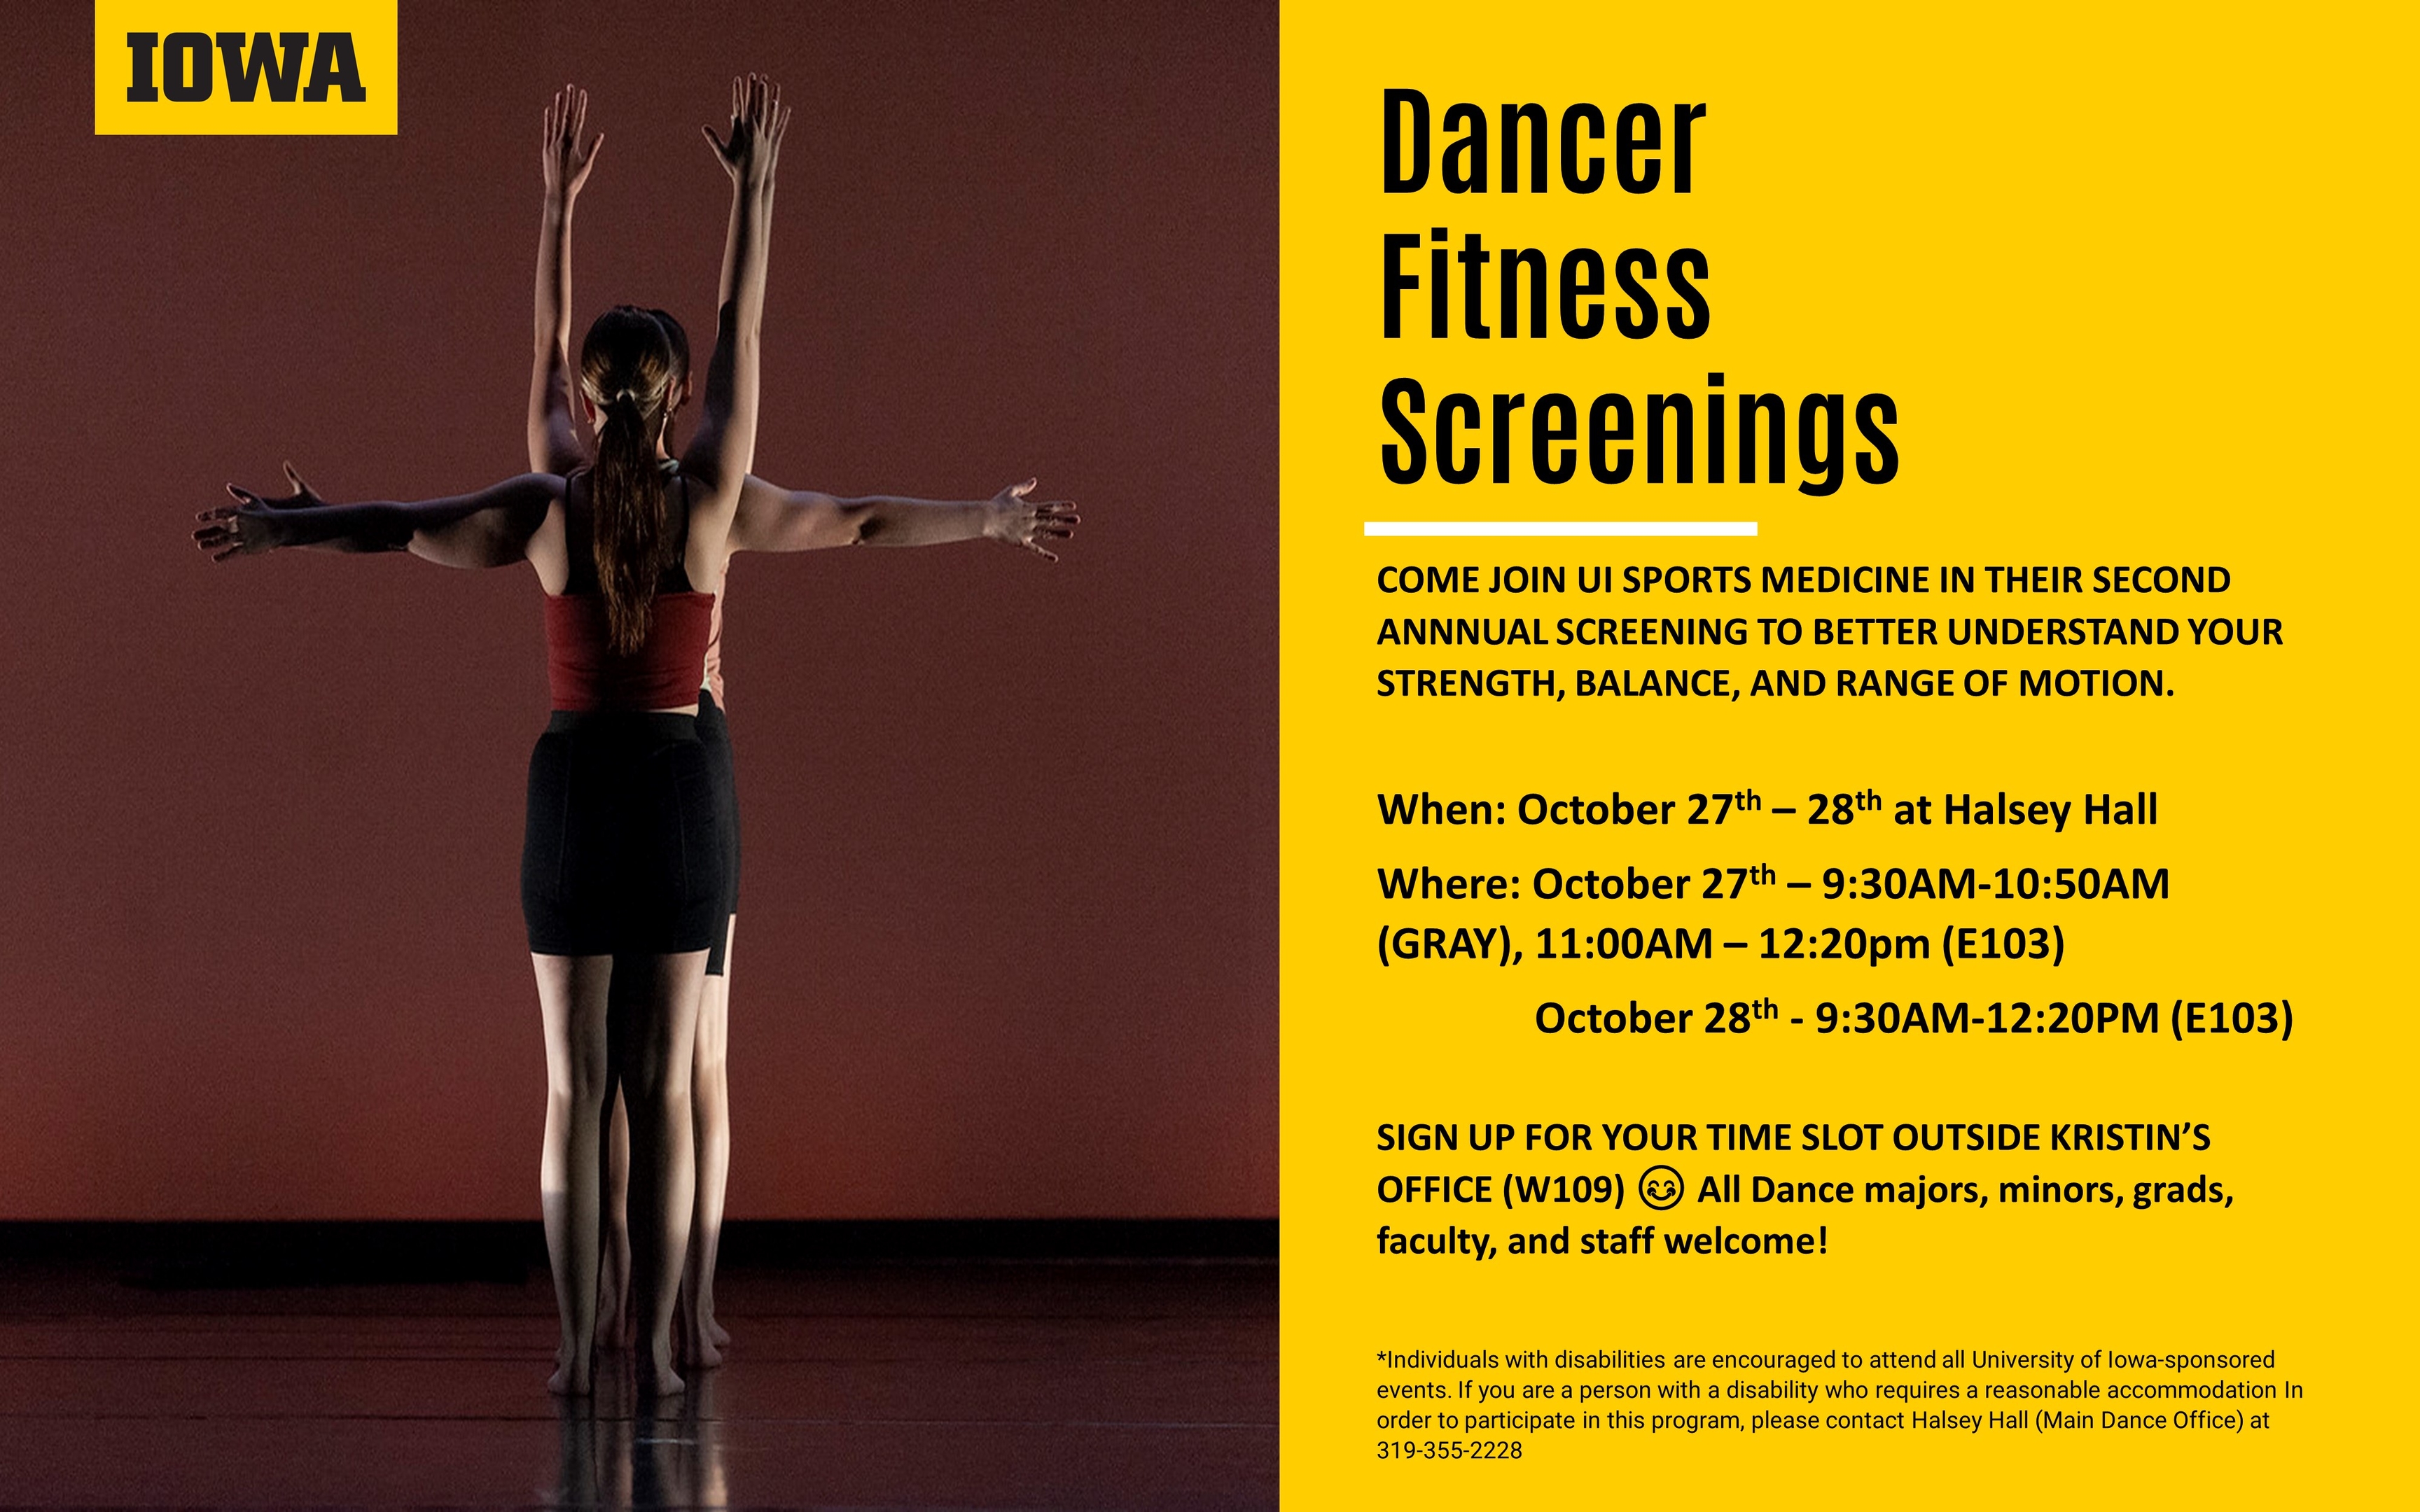 Dancer Fitness Screenings. Sign up outside of Kristin's office, W109